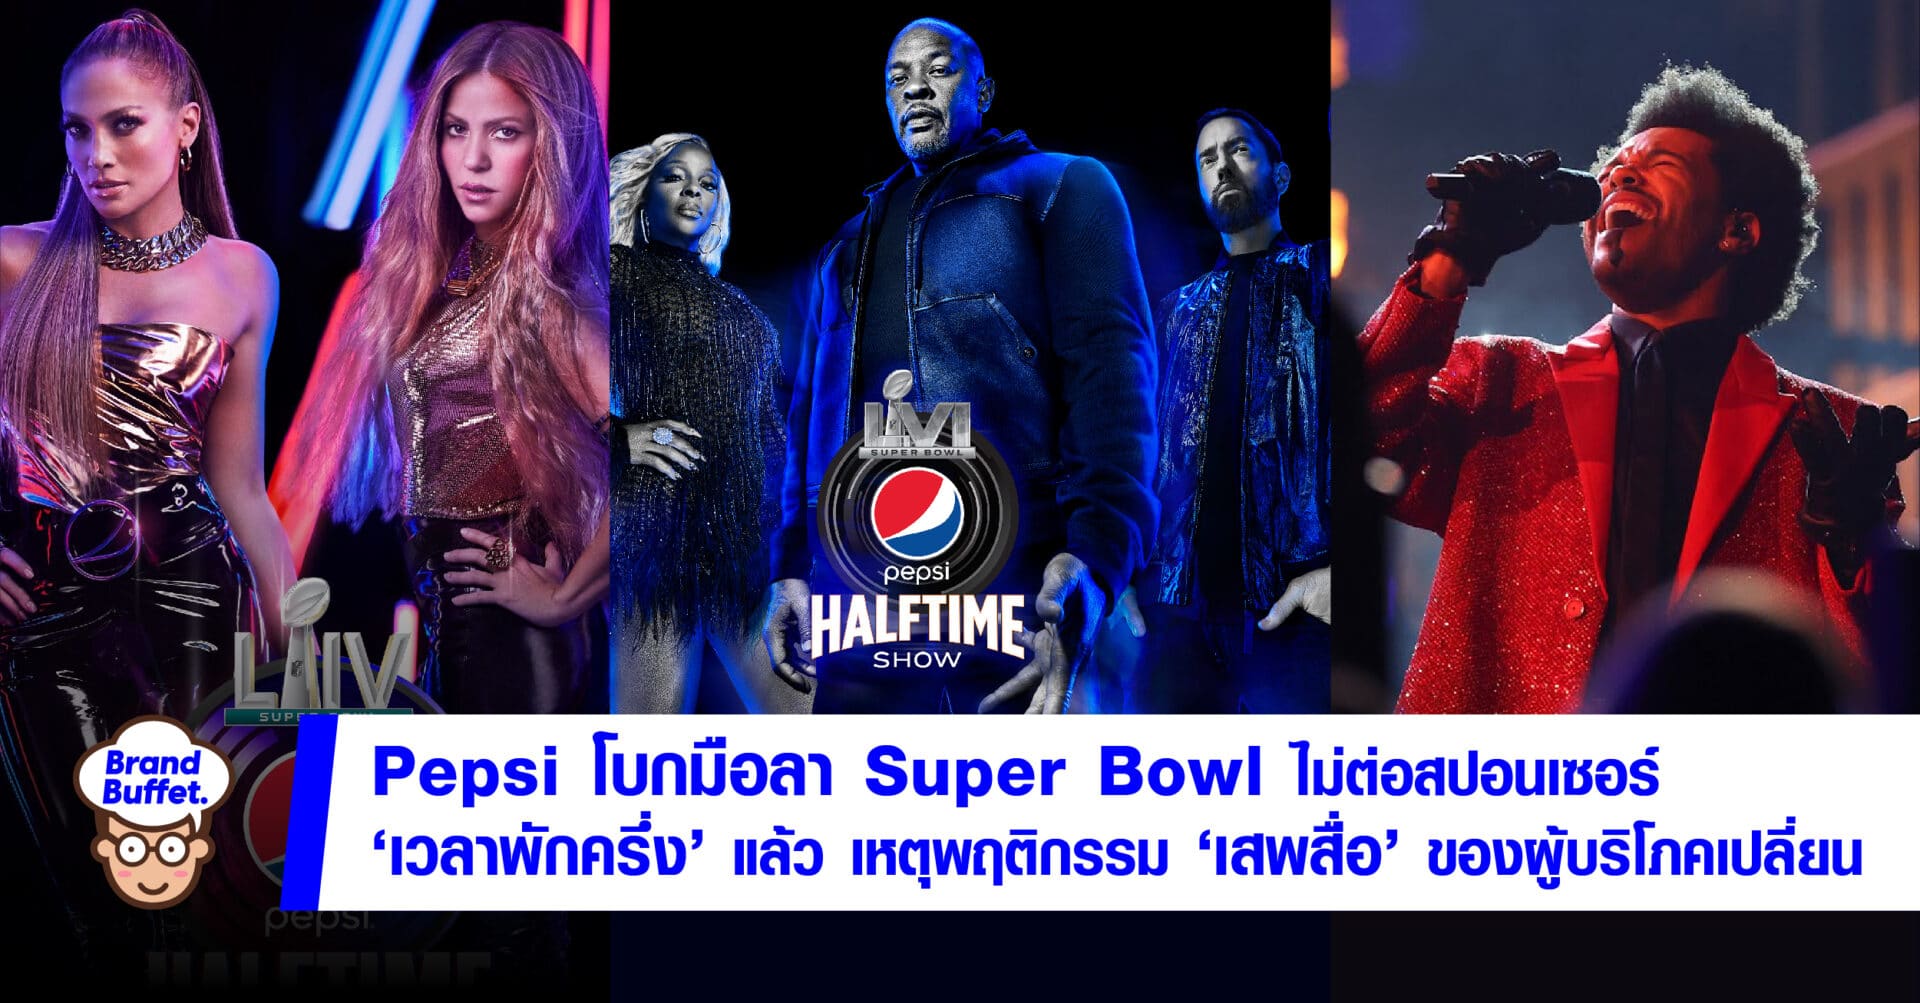 Pepsi โบกมือลา Super Bowl Halftime shows ปิดฉากสปอนเซอร์มูลค่า 2 พัน